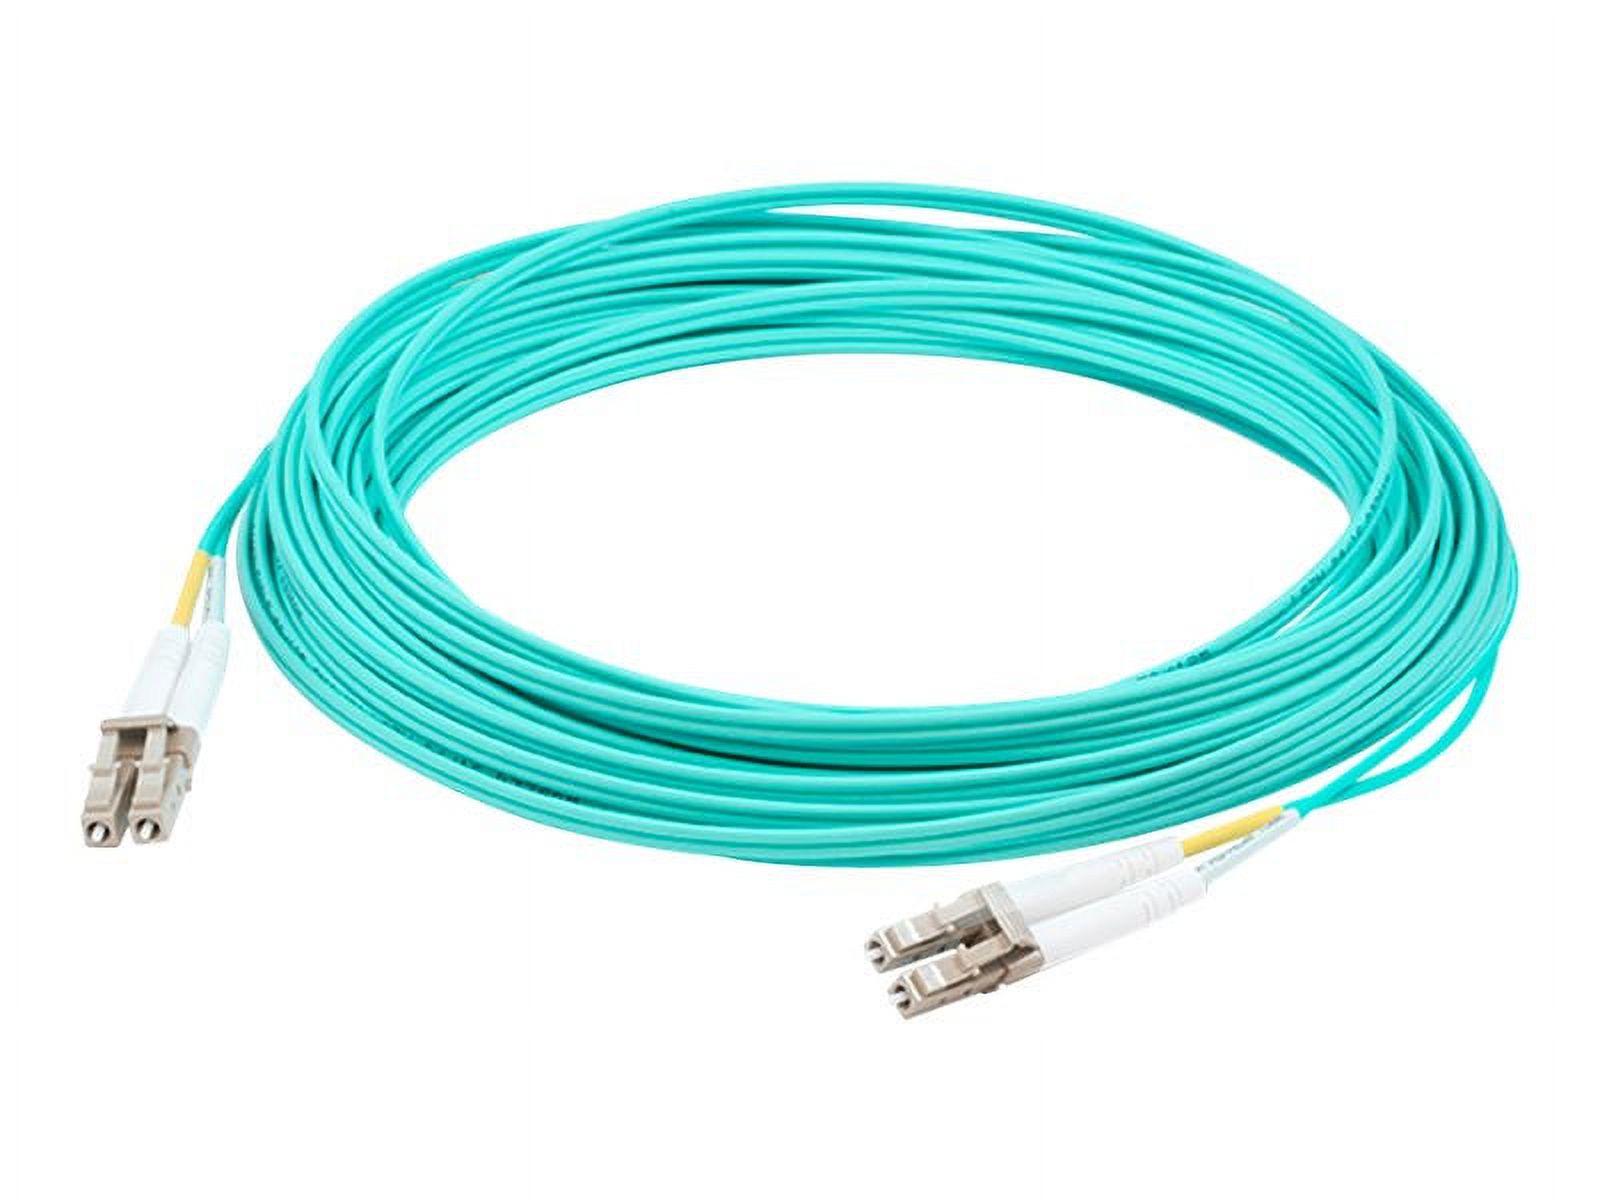 AddOn 50m LC OM3 Aqua Patch Cable - patch cable - 164 ft - aqua - image 3 of 8